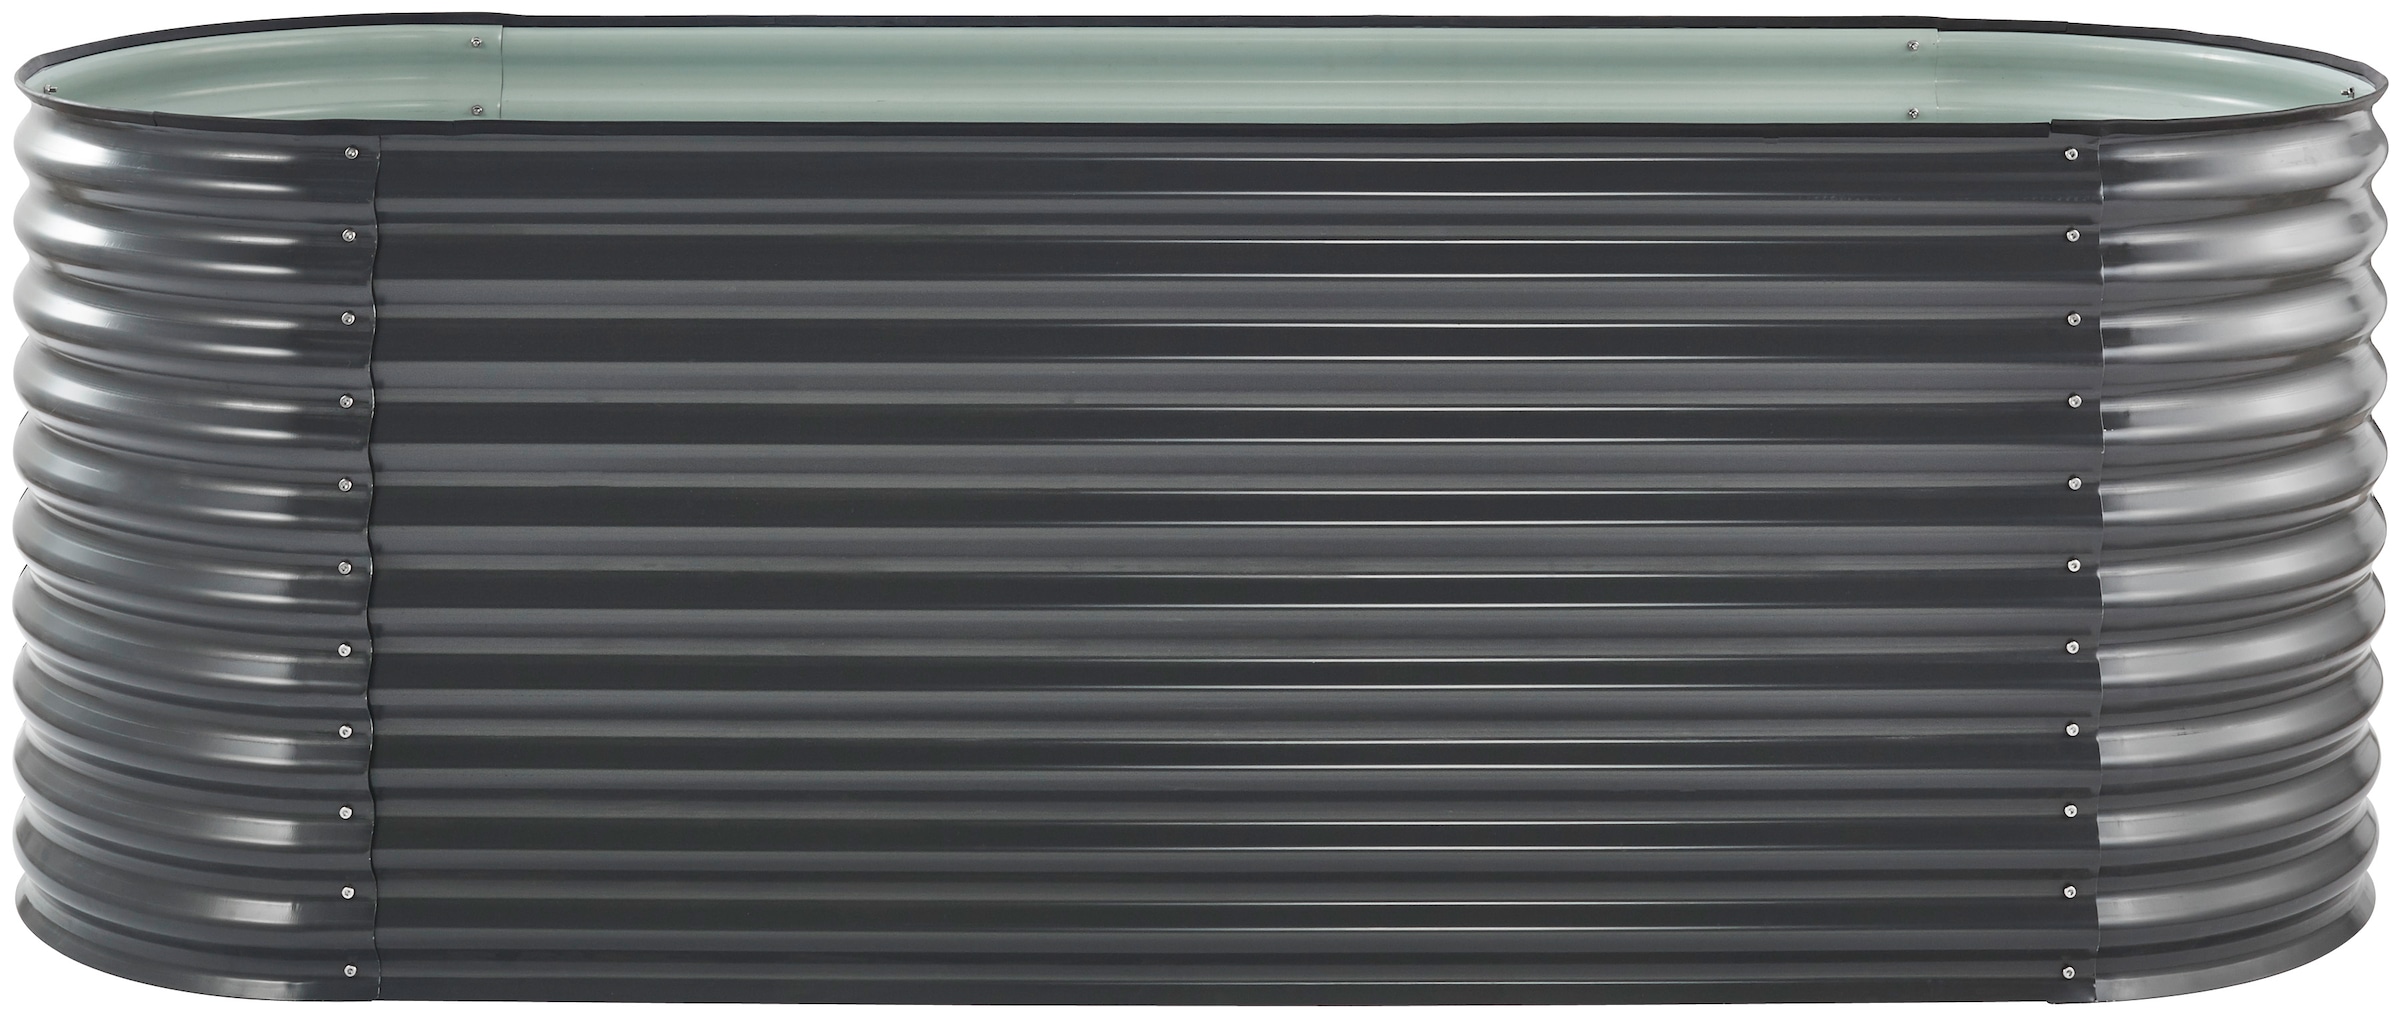 KONIFERA Hochbeet, BxTxH: 240x80x82 cm, aus verzinktem Stahl